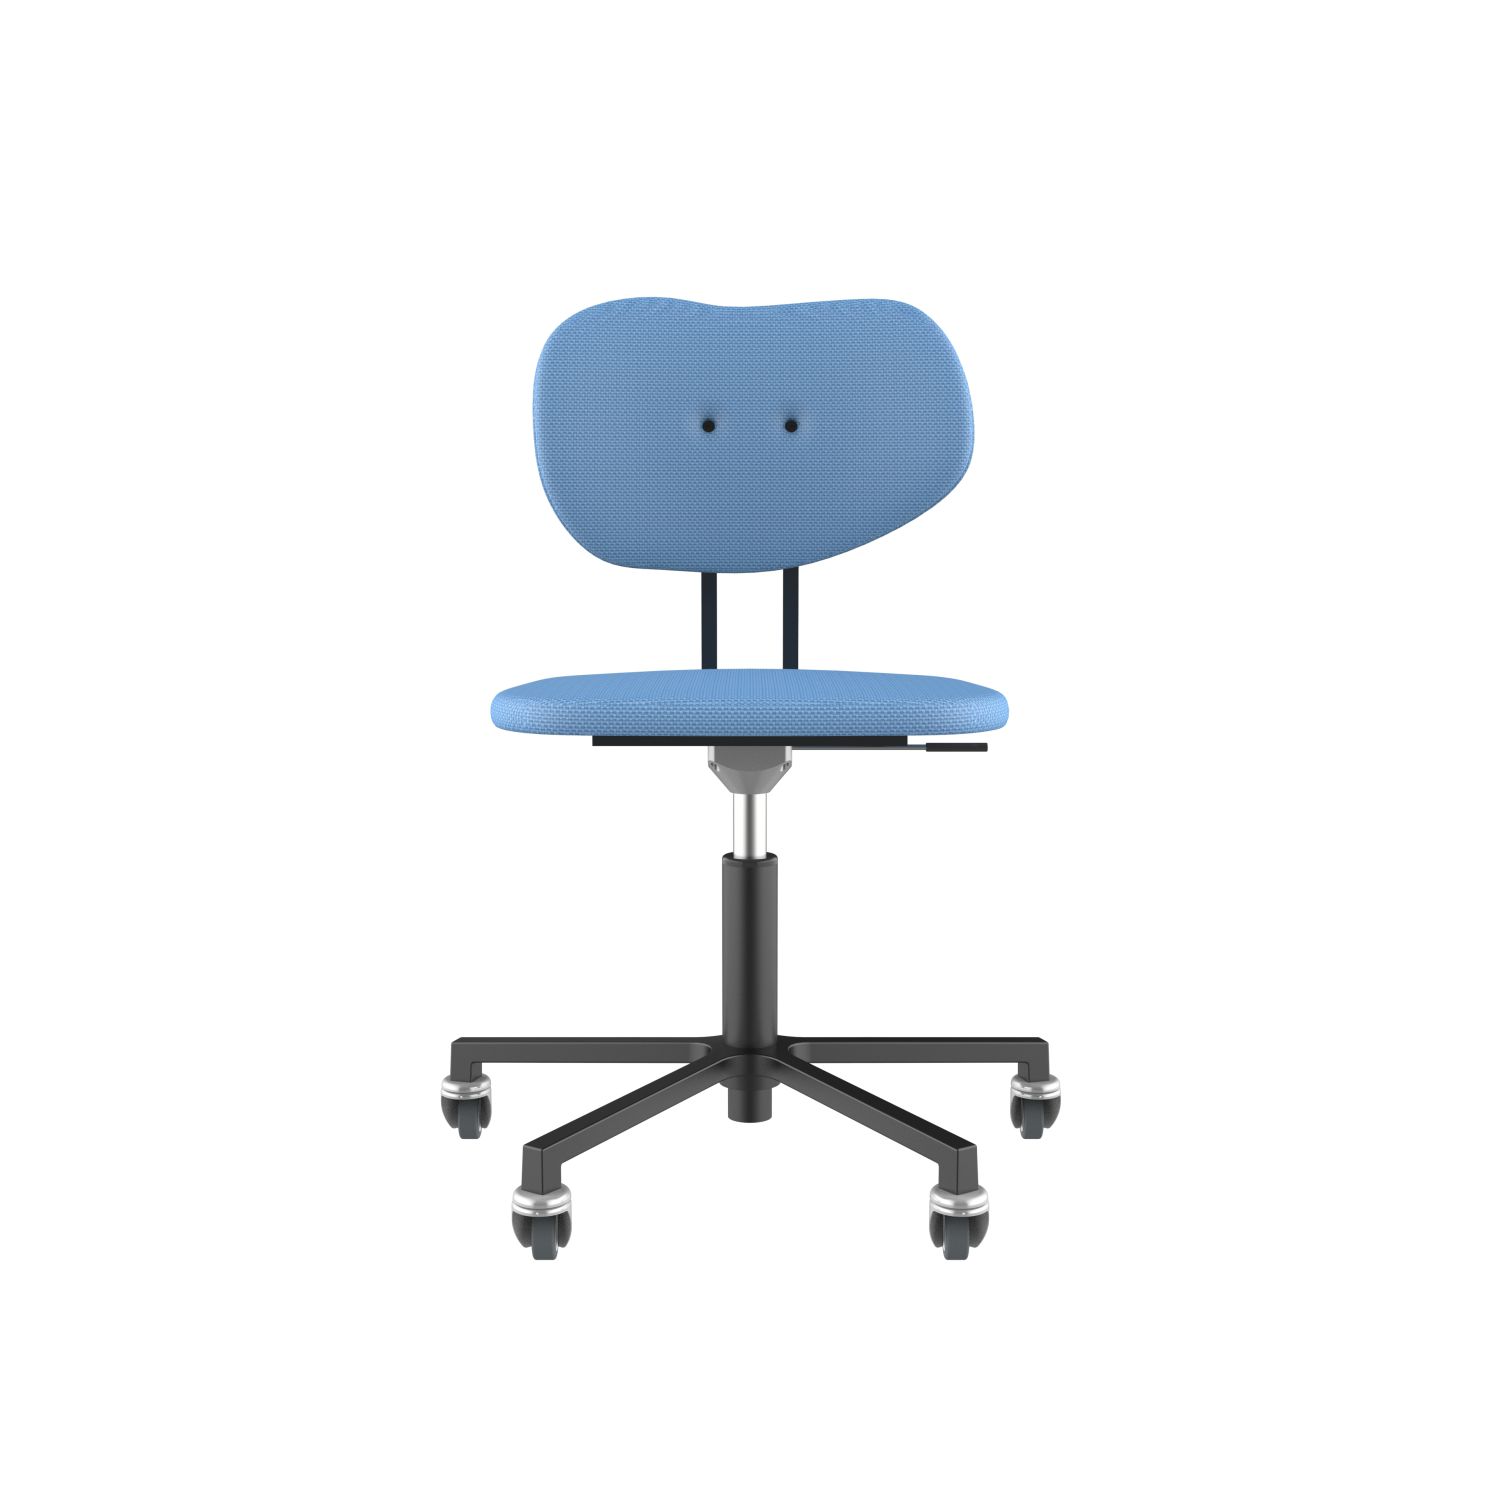 lensvelt maarten baas office chair without armrests backrest b blue horizon 040 black ral9005 soft wheels